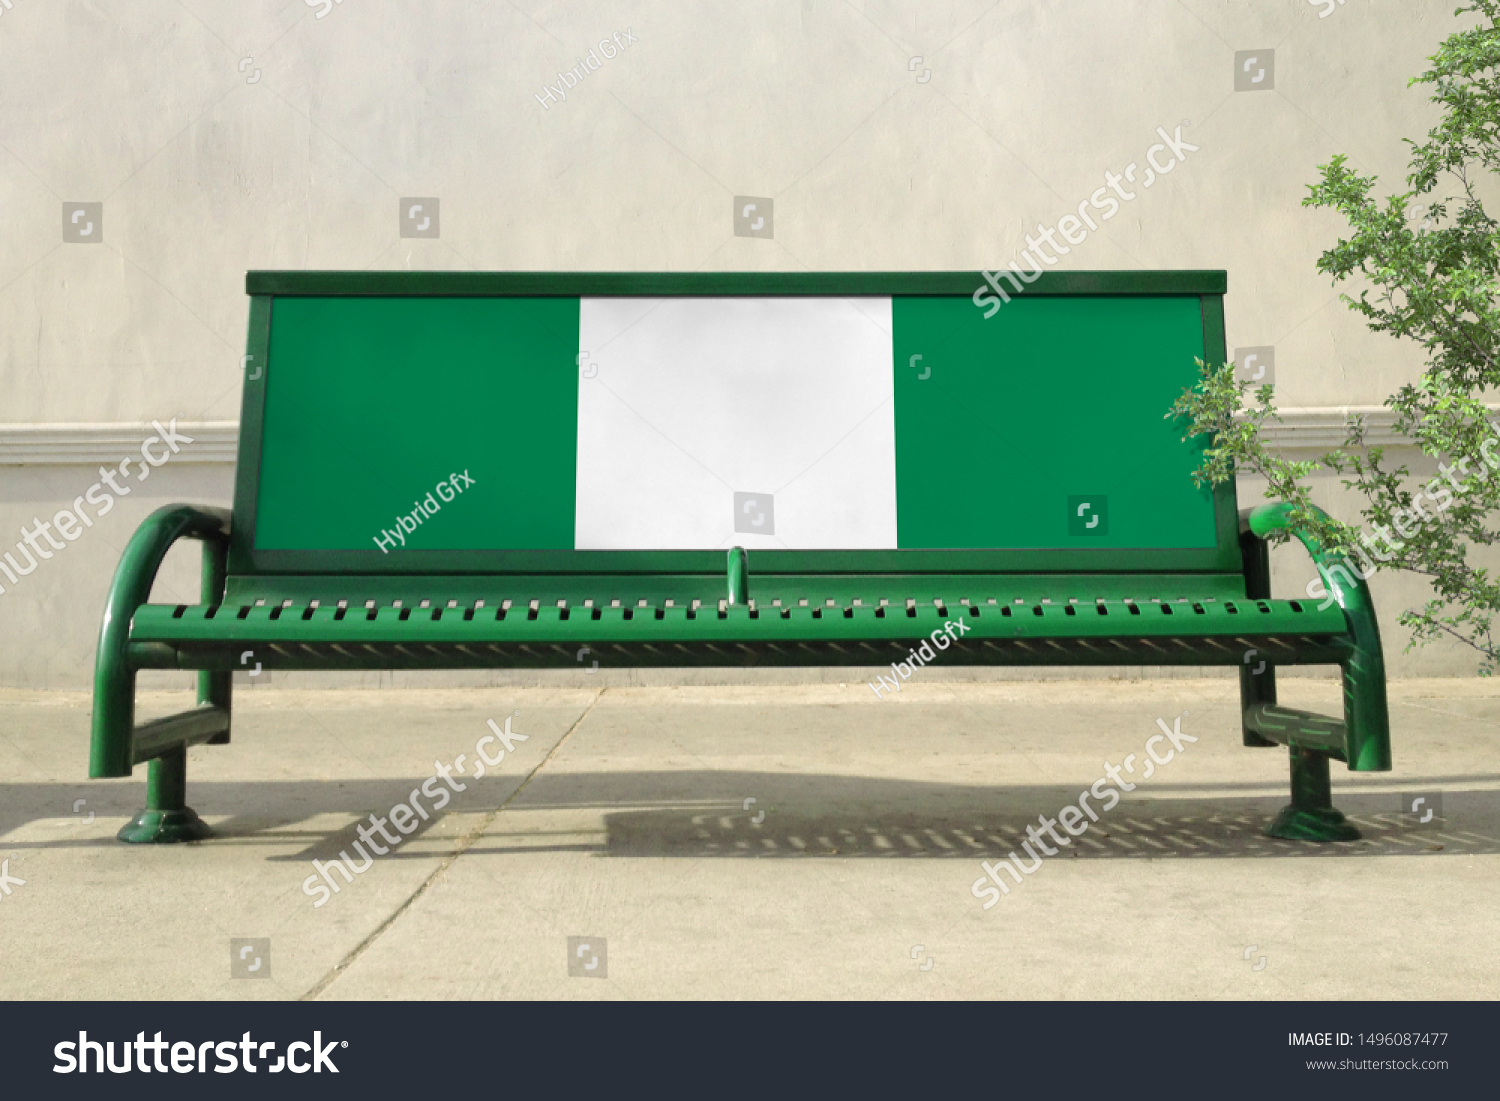 Flag of Nigeria on bench. Nigeria Flag on bench advertisement #1496087477